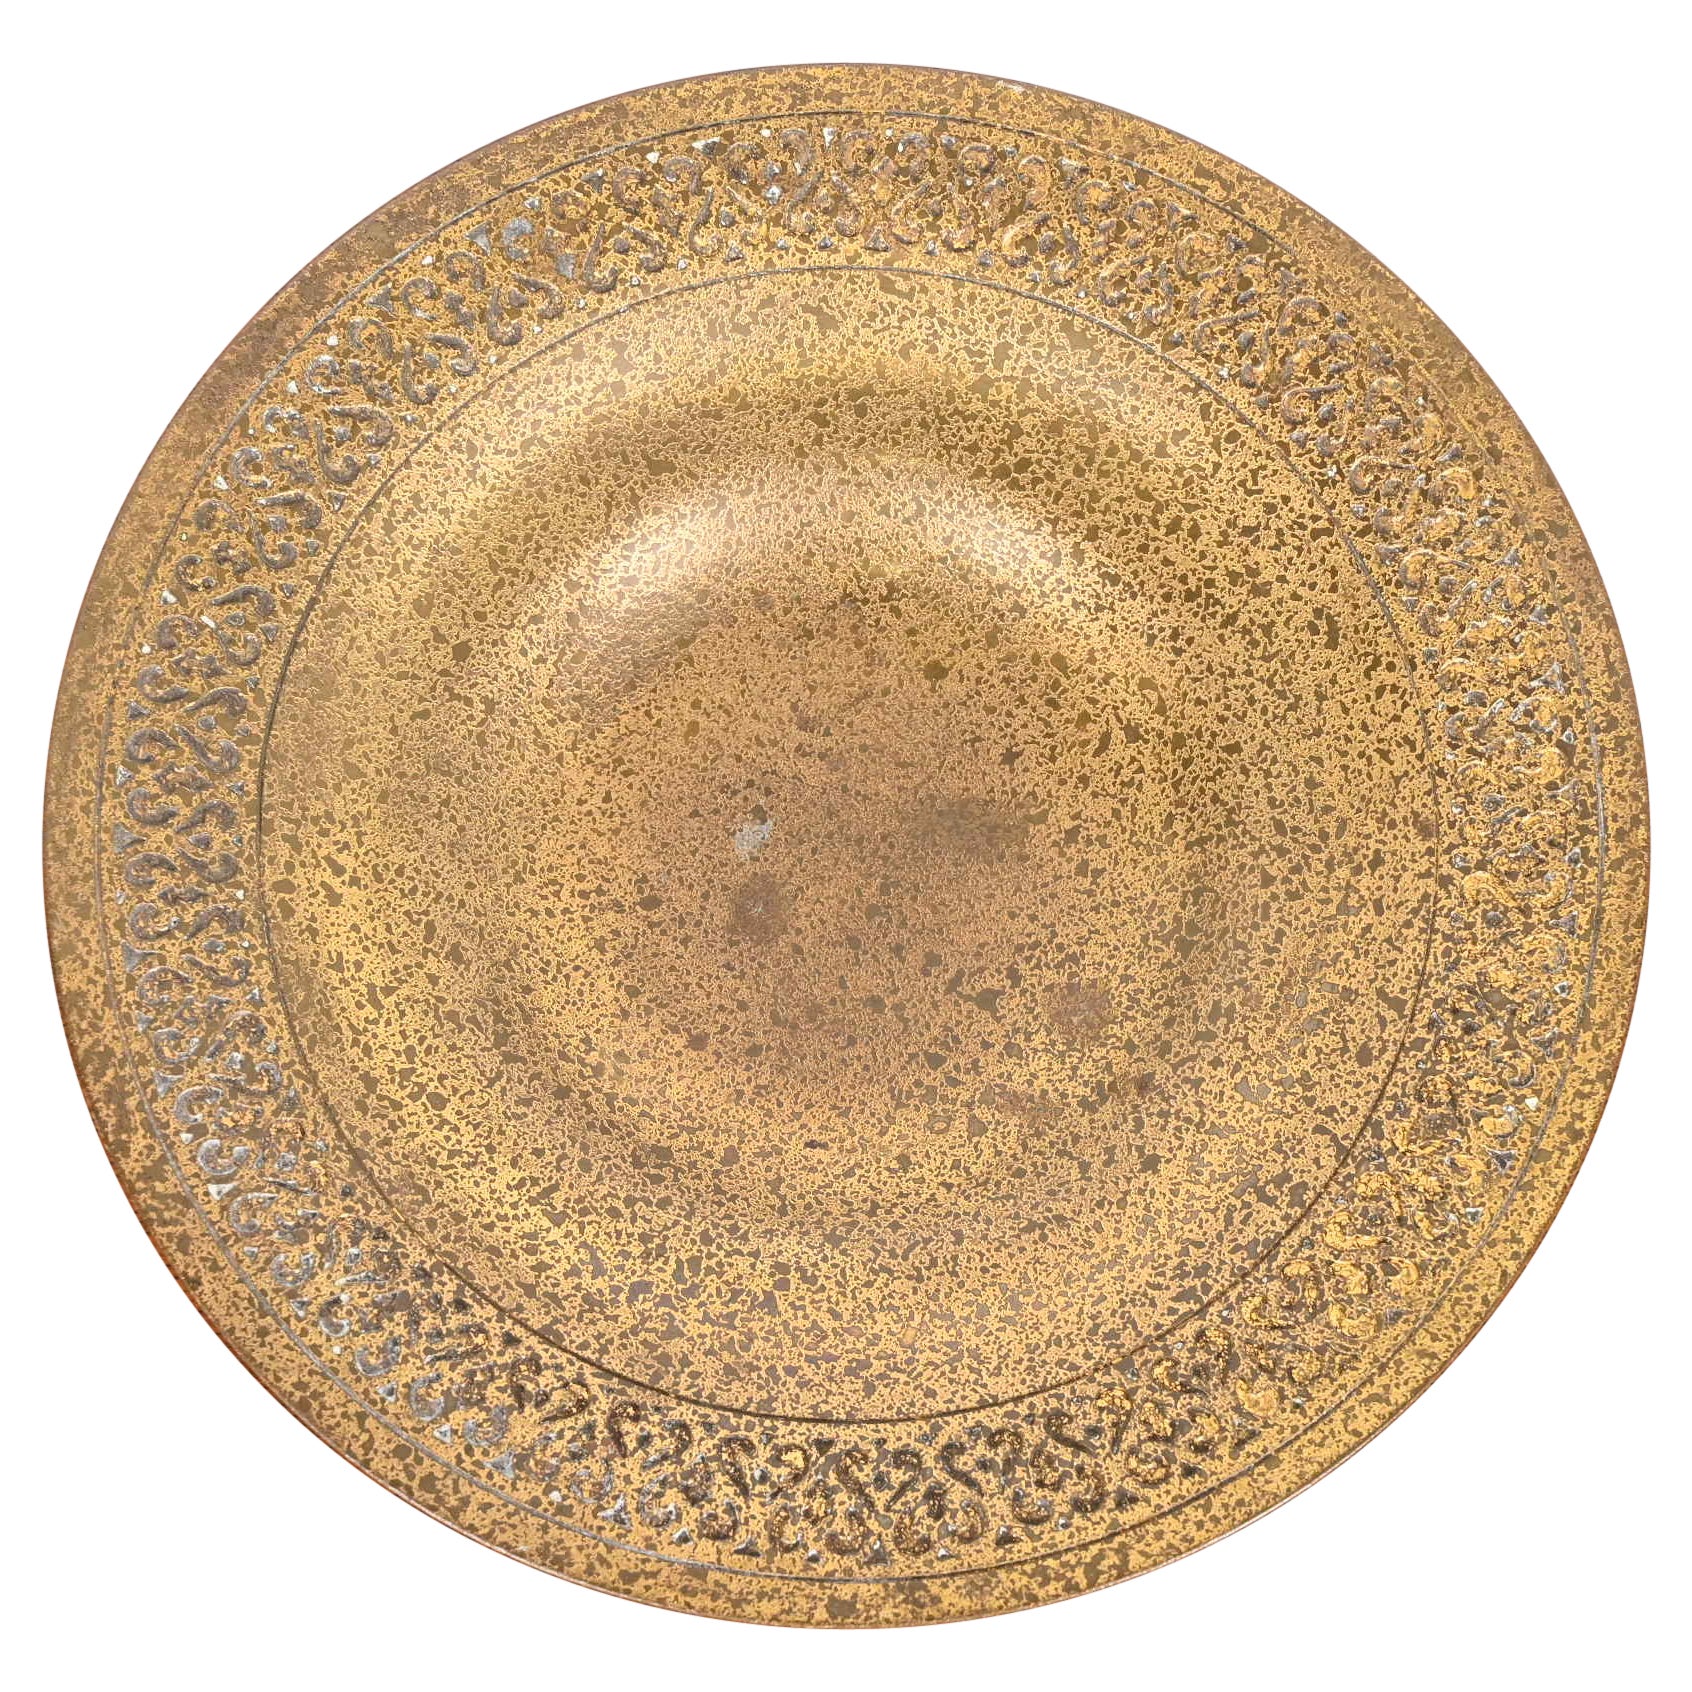 Tiffany Studios New York Bronze Doré Bowl For Sale